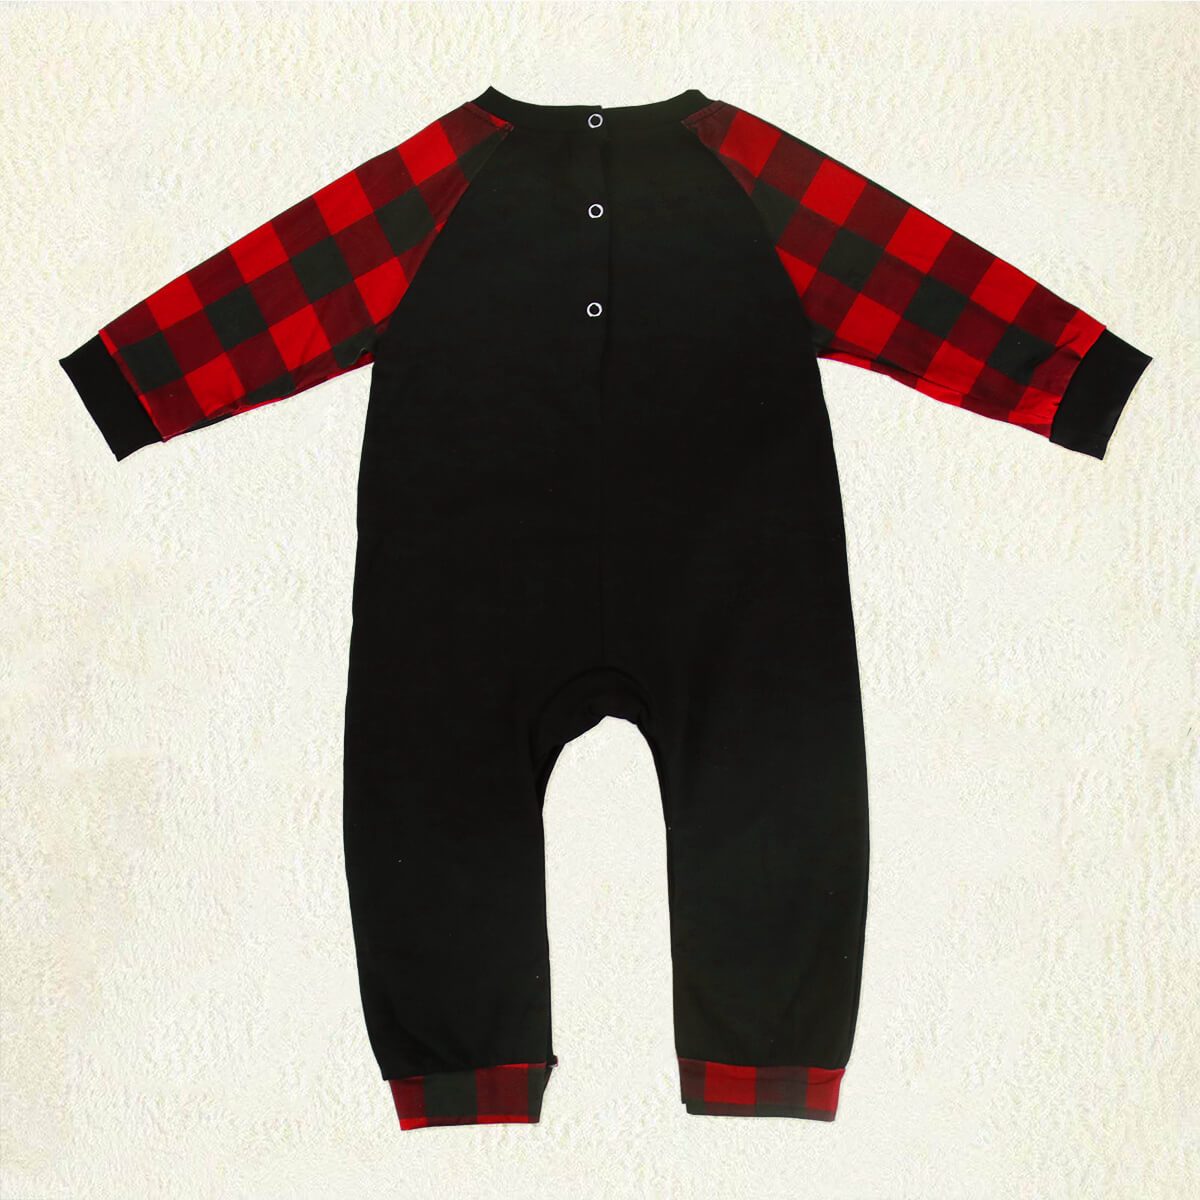 "Merry Christmas 2021" Red Plaid Family Matching Pajamas Sets